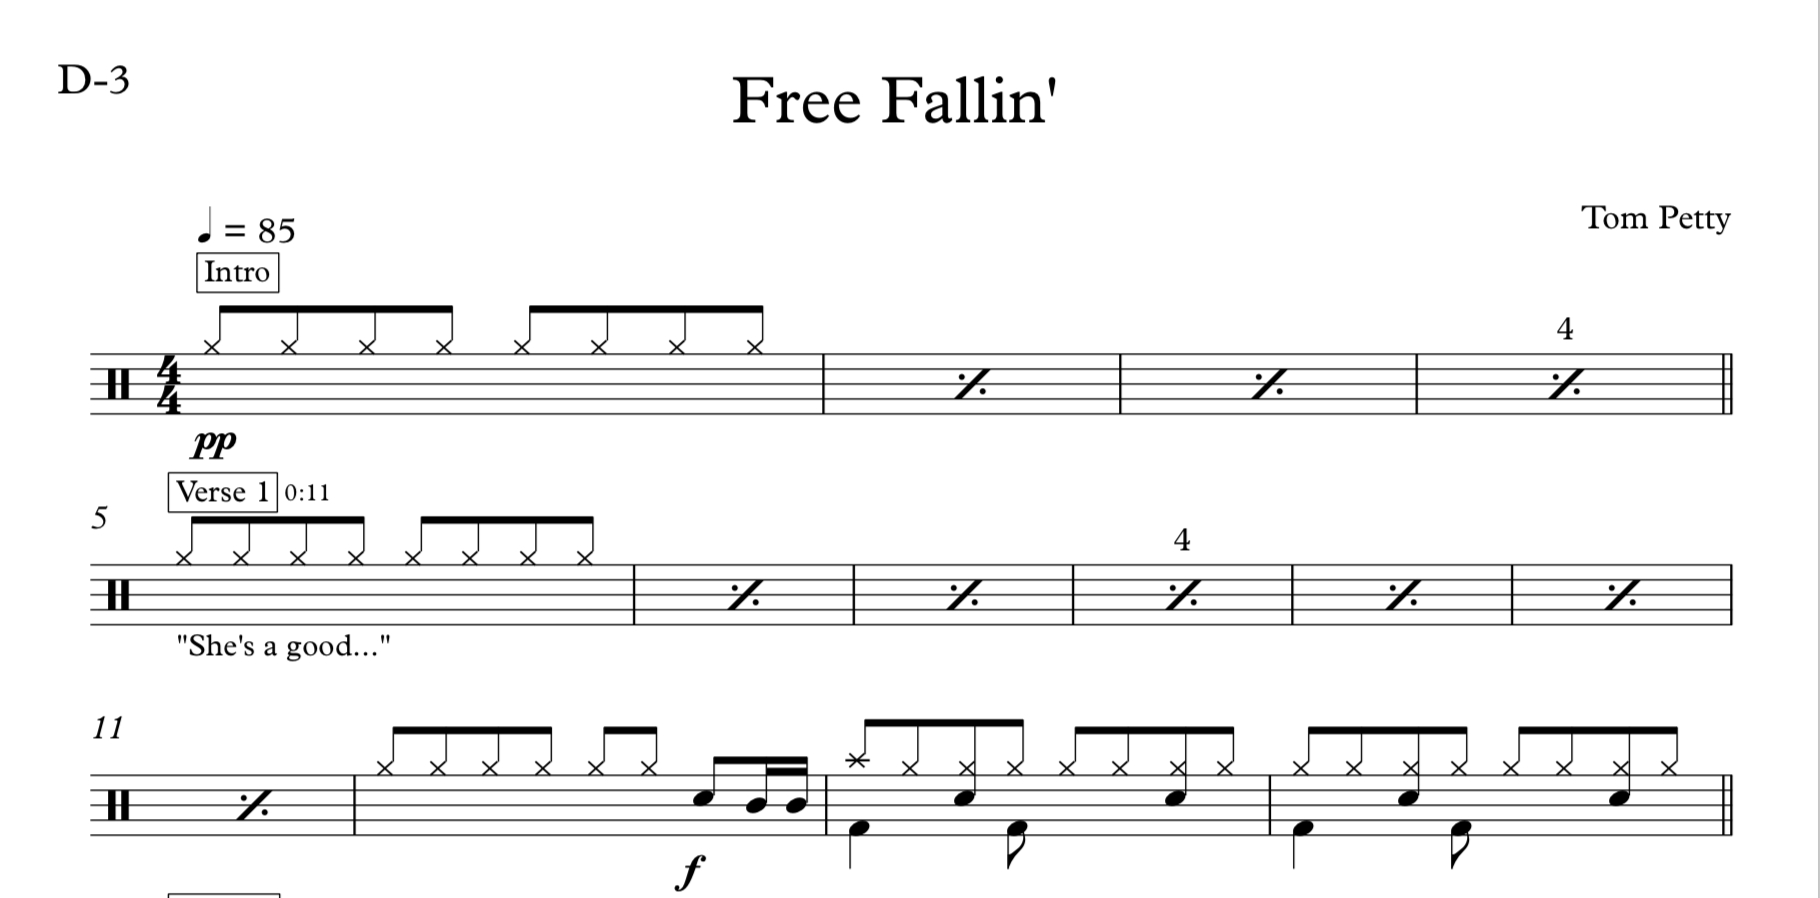 Free Fallin Chords Free Fallin Drum Music